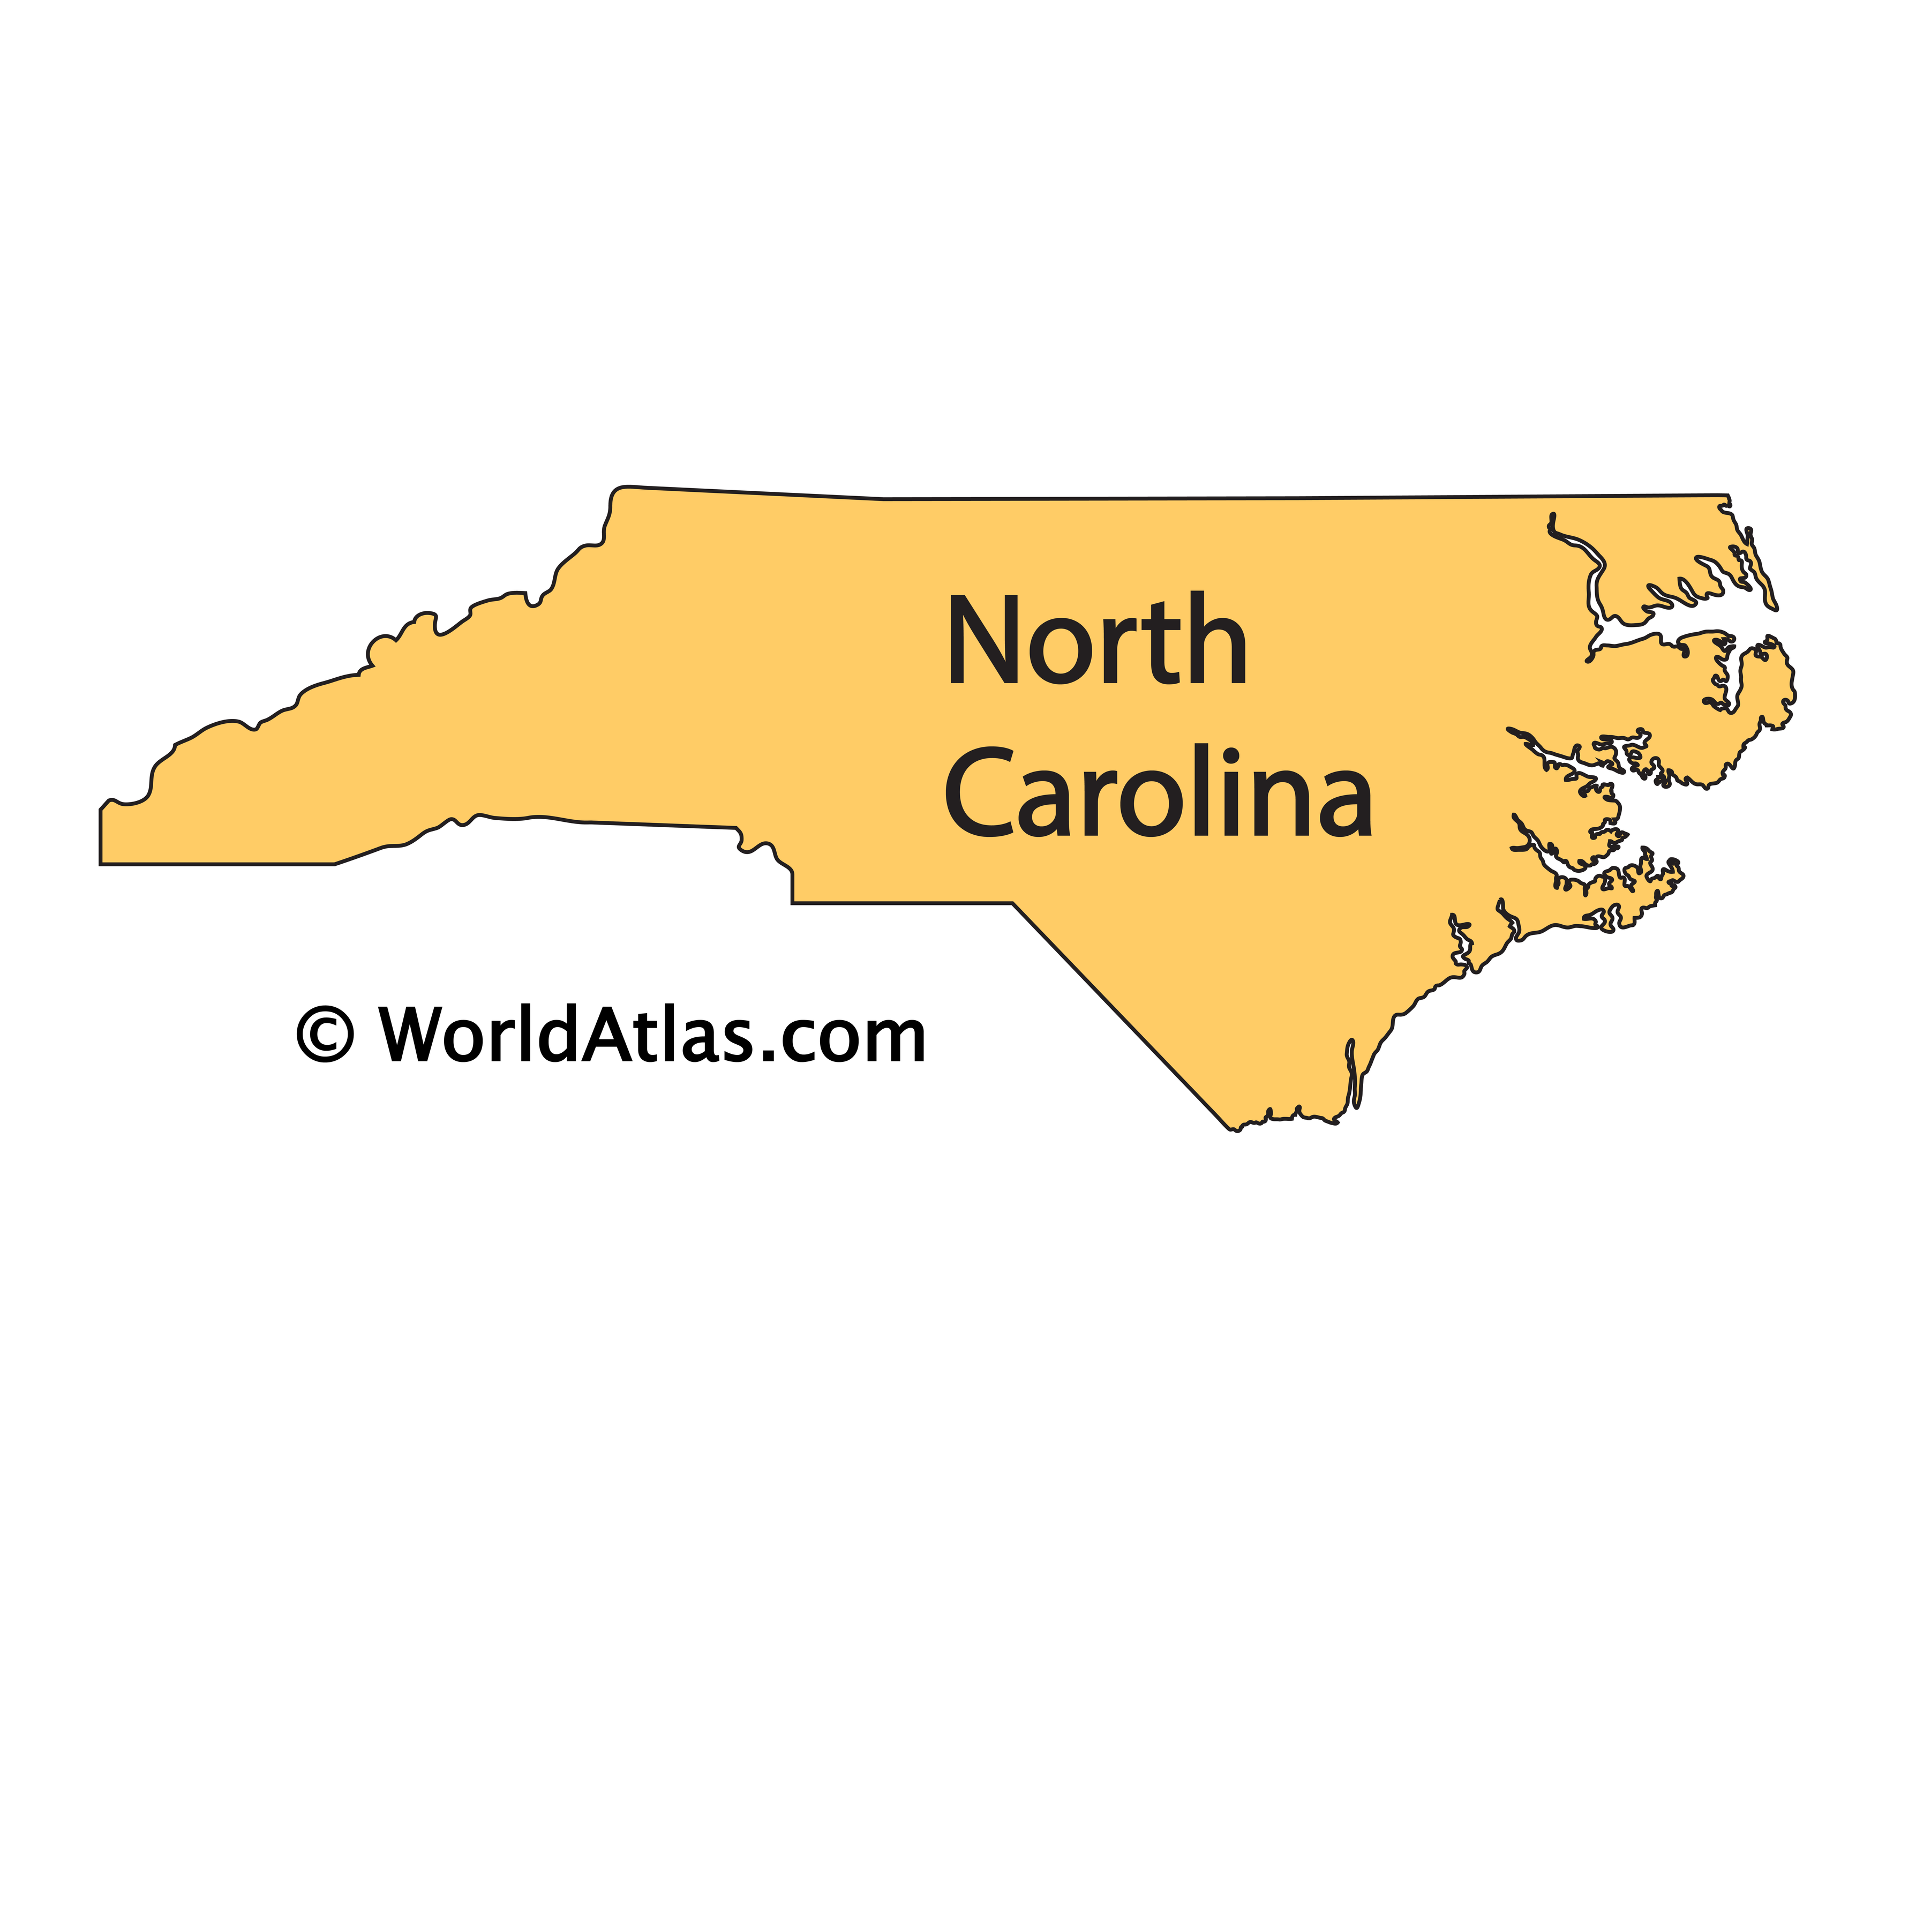 North Carolina Maps And Facts World Atlas